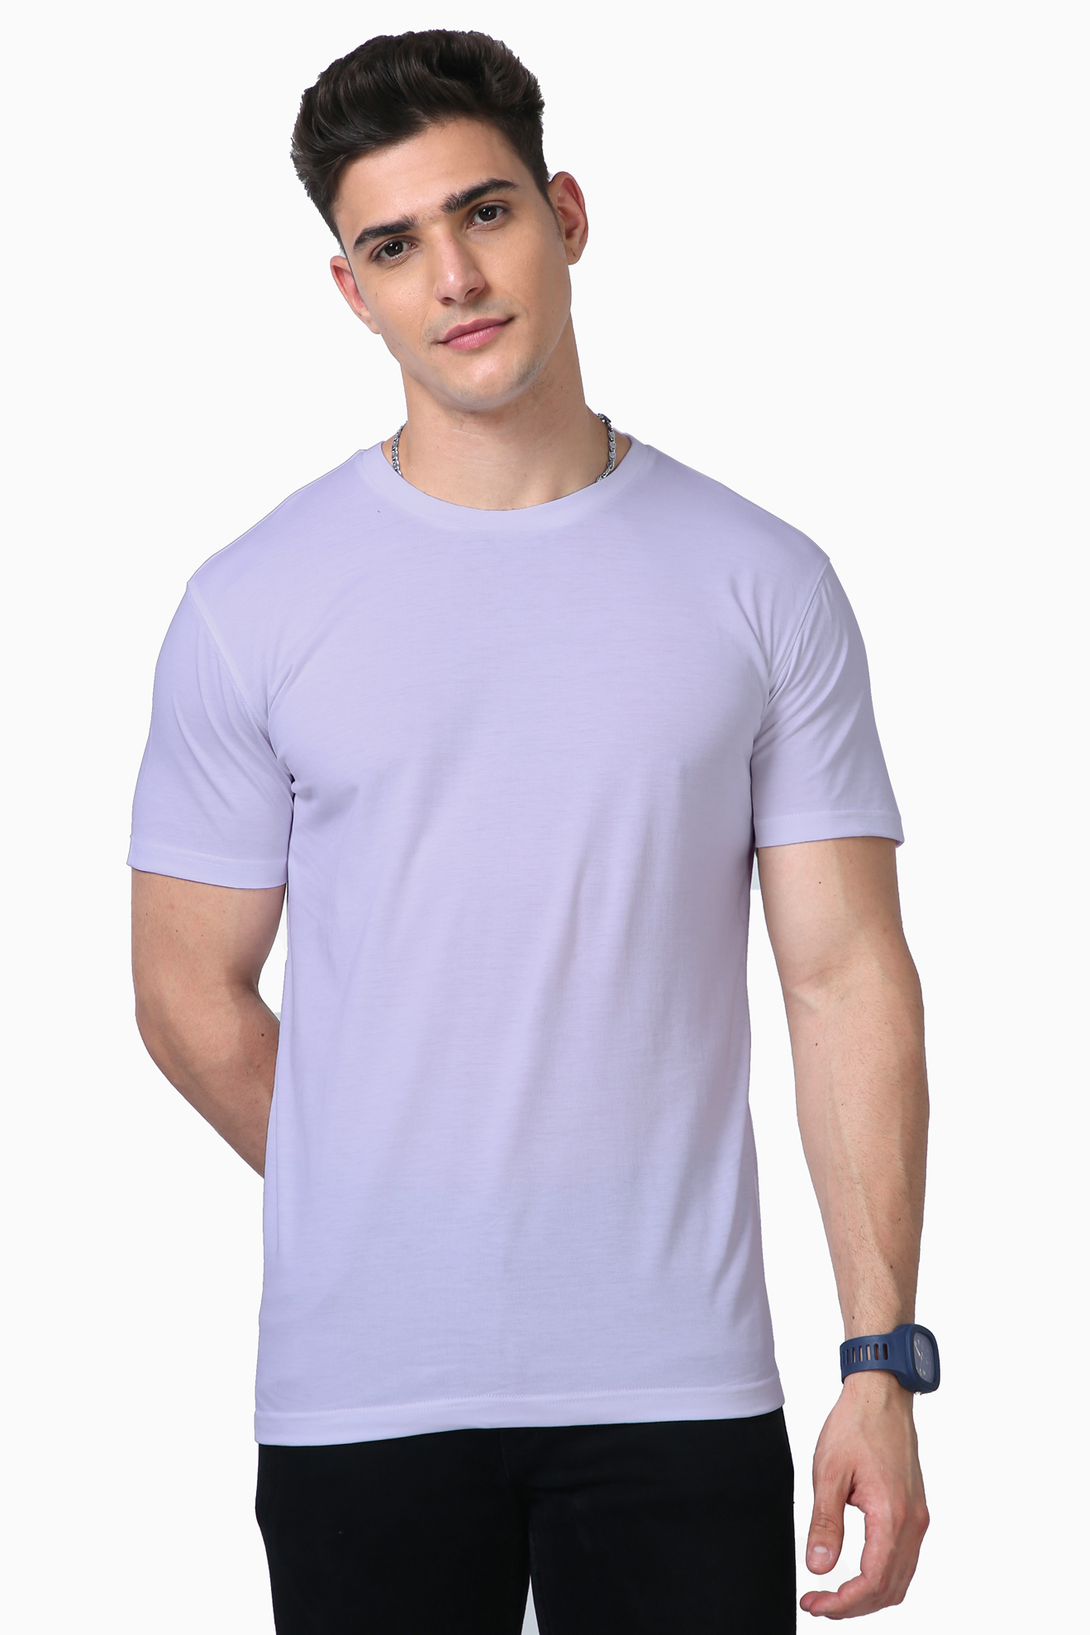 Plain Supima T-Shirts For Men - WowWaves - 4